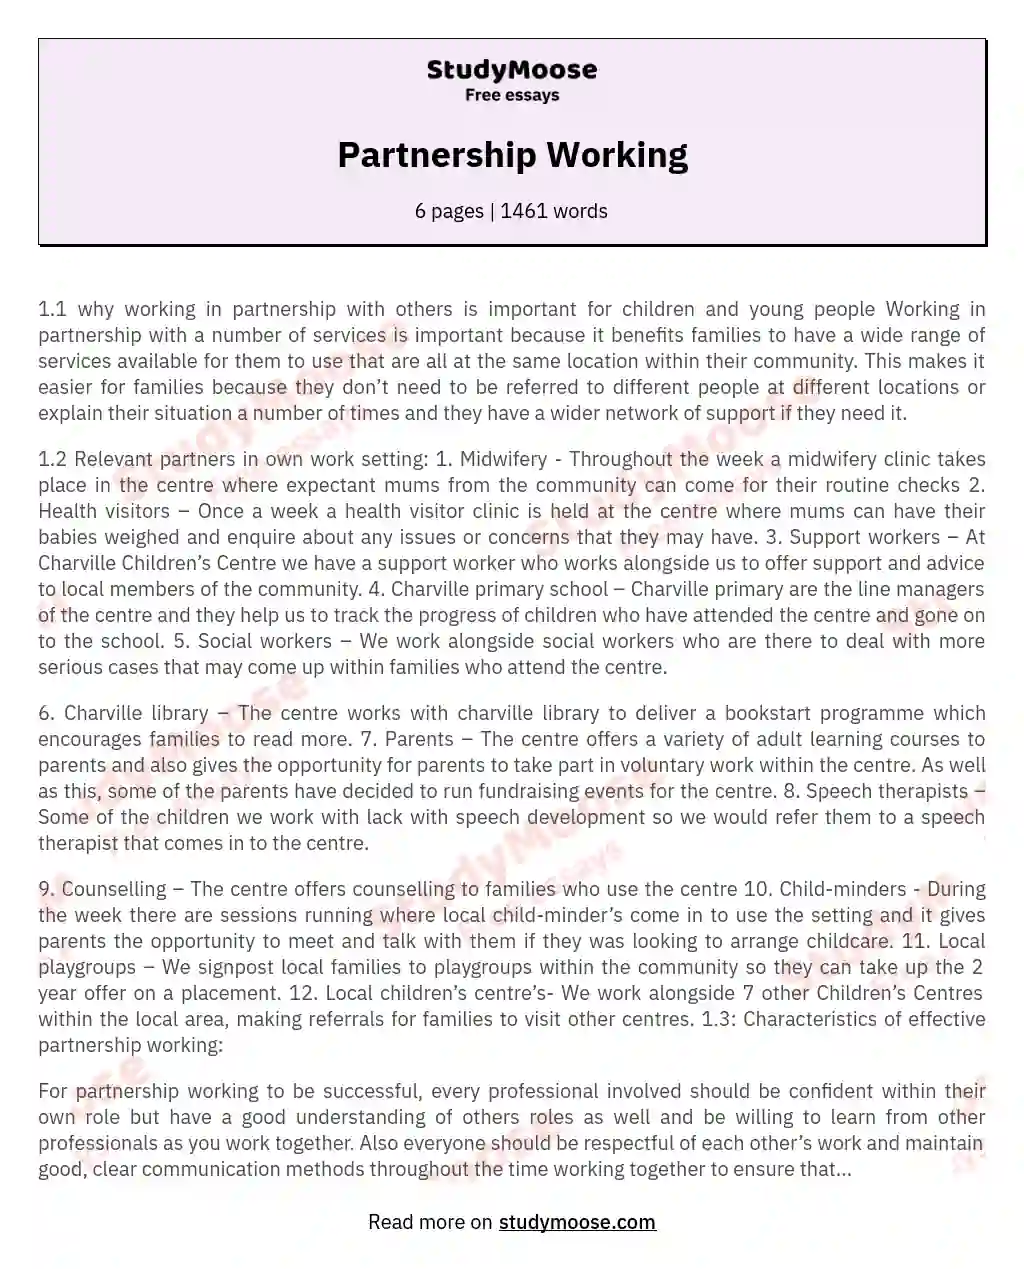 Partnership Working essay